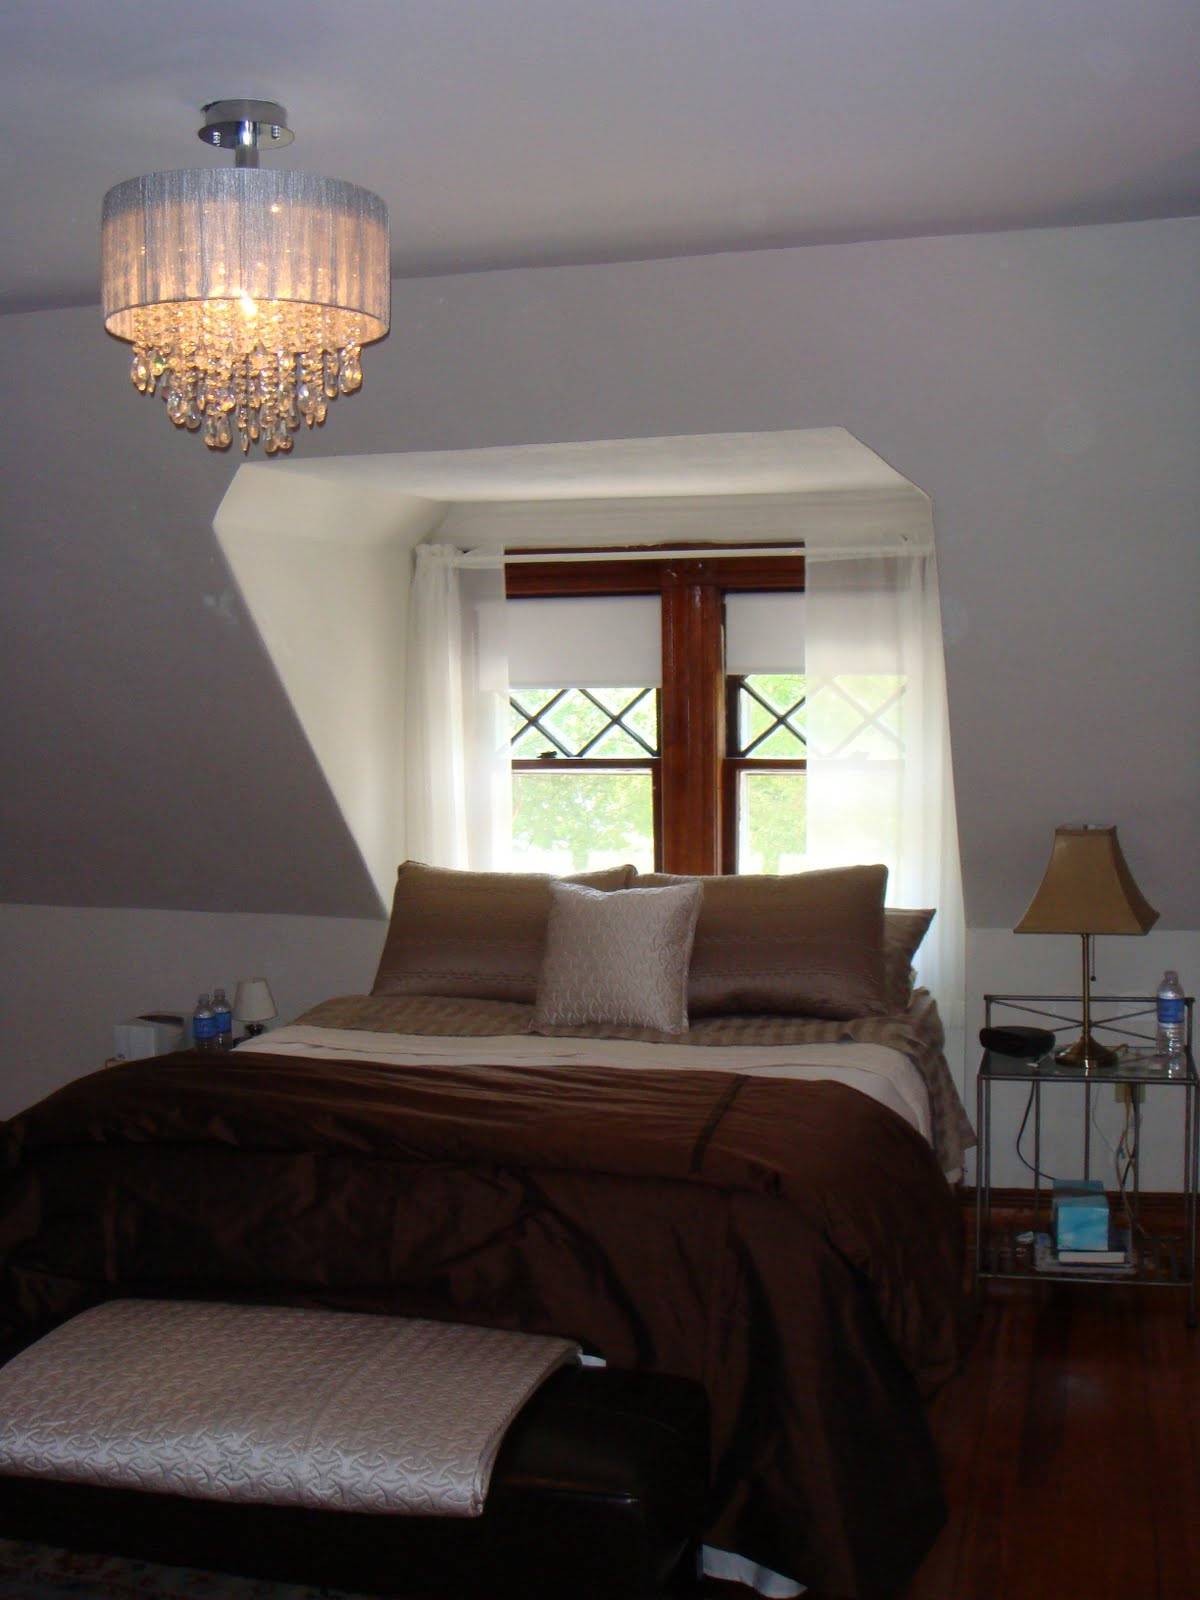 Master Bedroom Light Fixtures
 Ceiling Bedroom Light Fixtures Simple And Easy Rustic